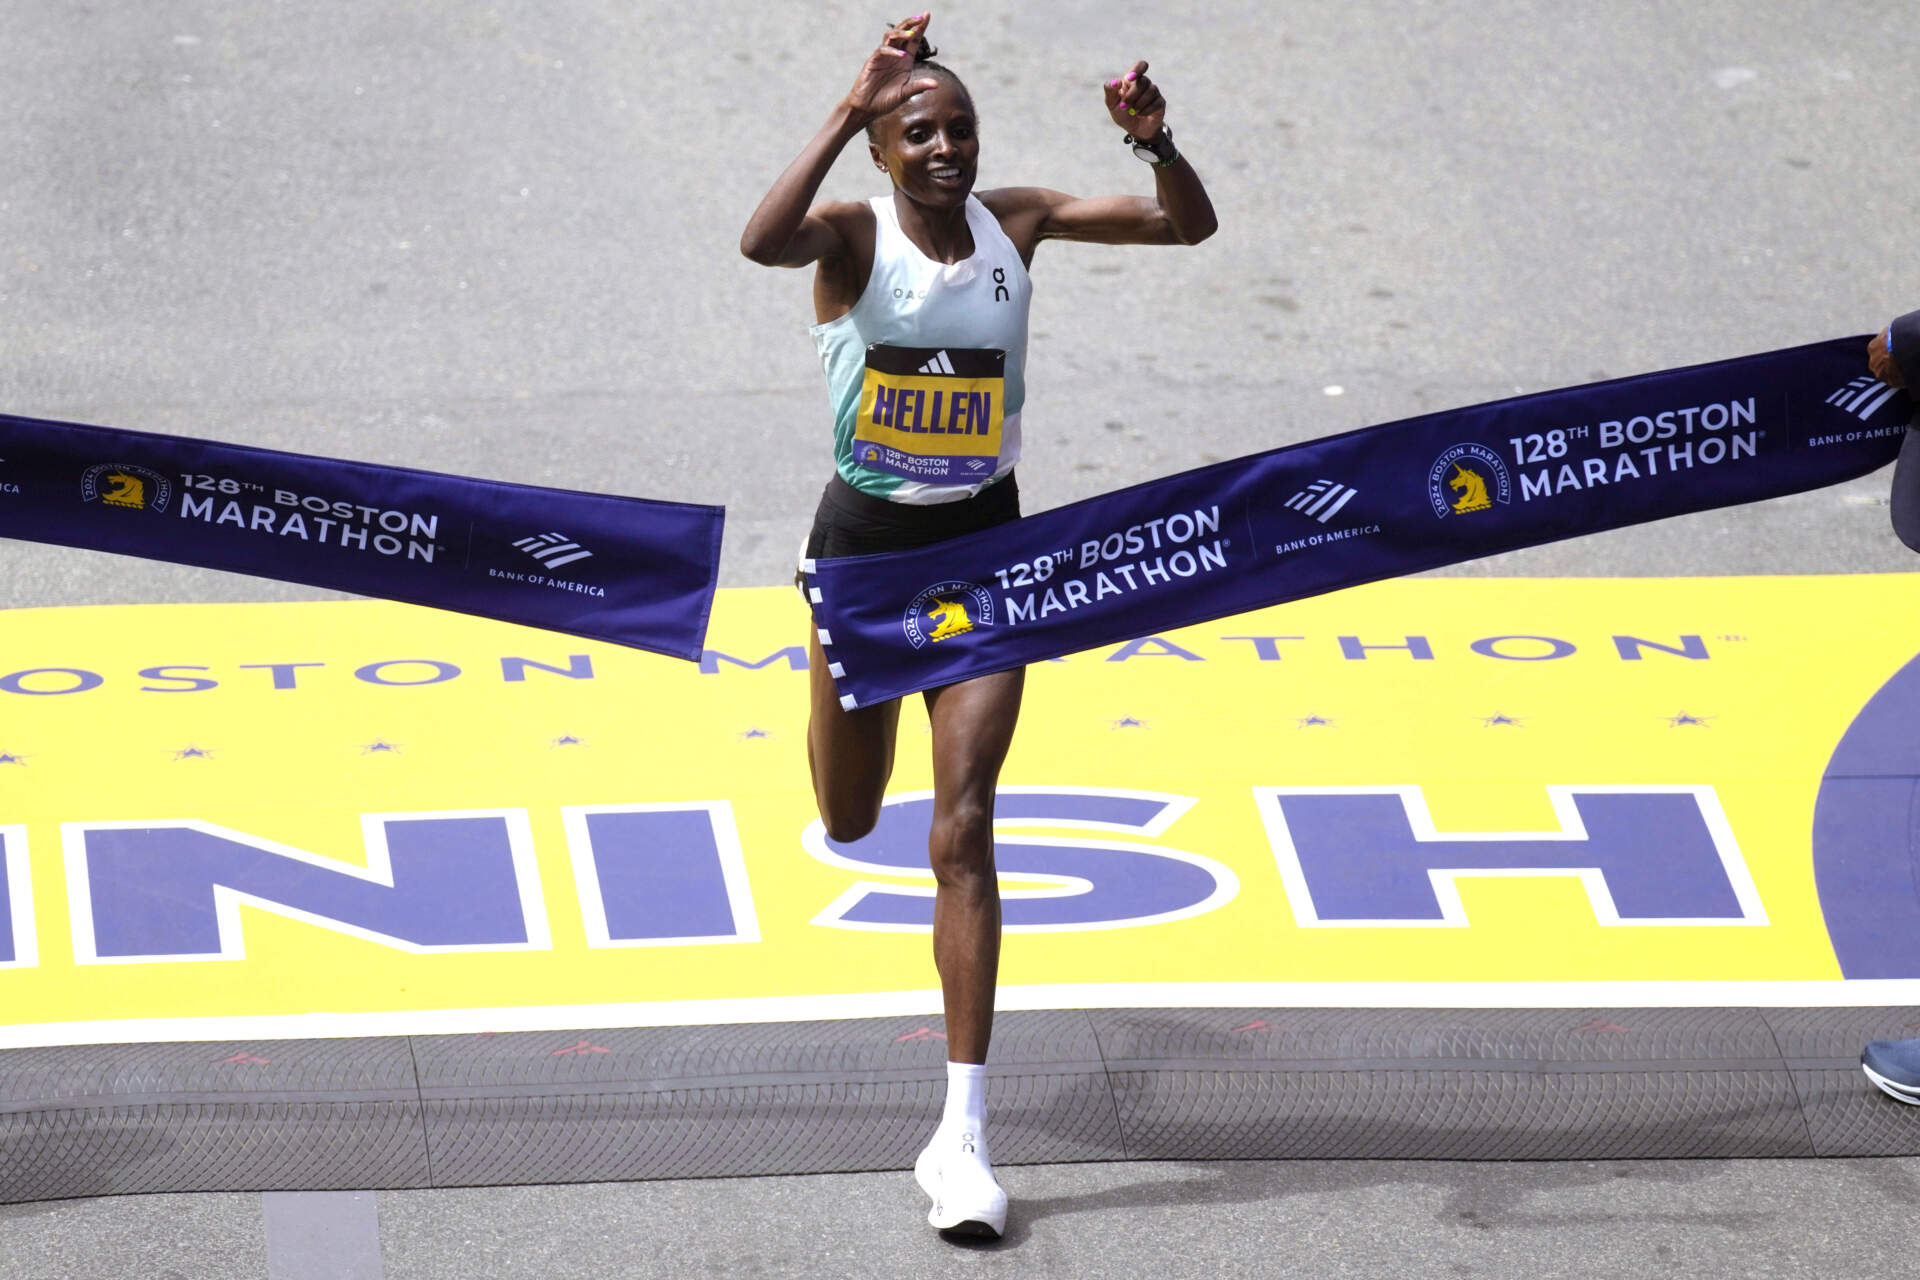 Hellen Obiri, of Kenya, raises her arms as she wins the women's division at the Boston Marathon. (Charles Krupa/AP)